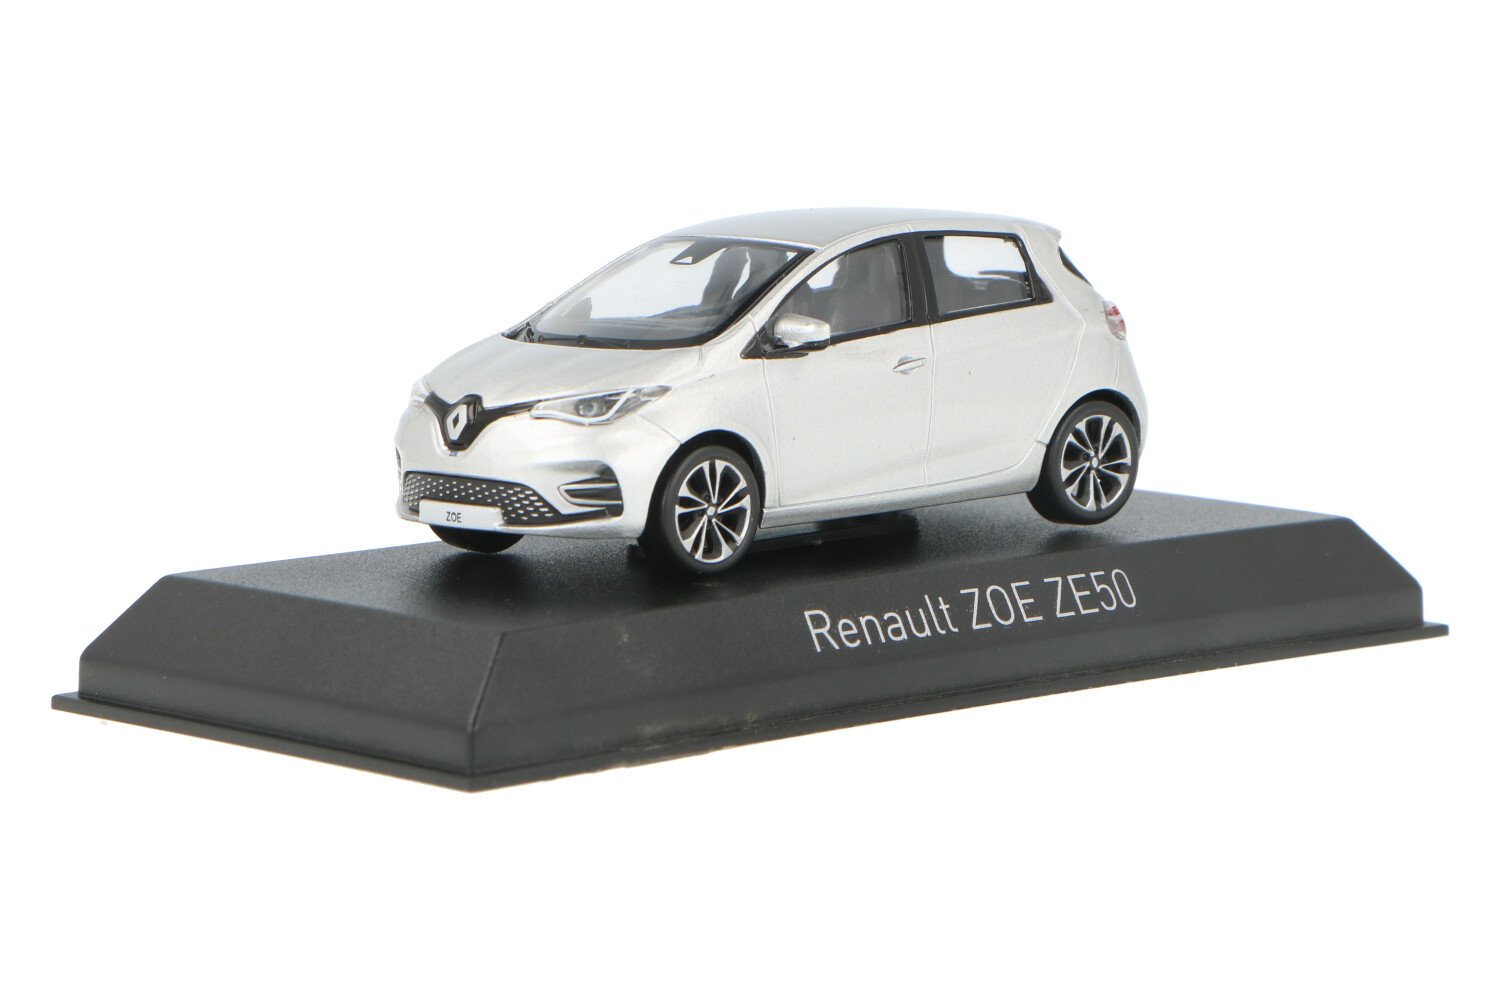 Renault-Zoé-ZE50-517564_13153551095175649Renault-Zoé-ZE50-517564_Houseofmodelcars_.jpg